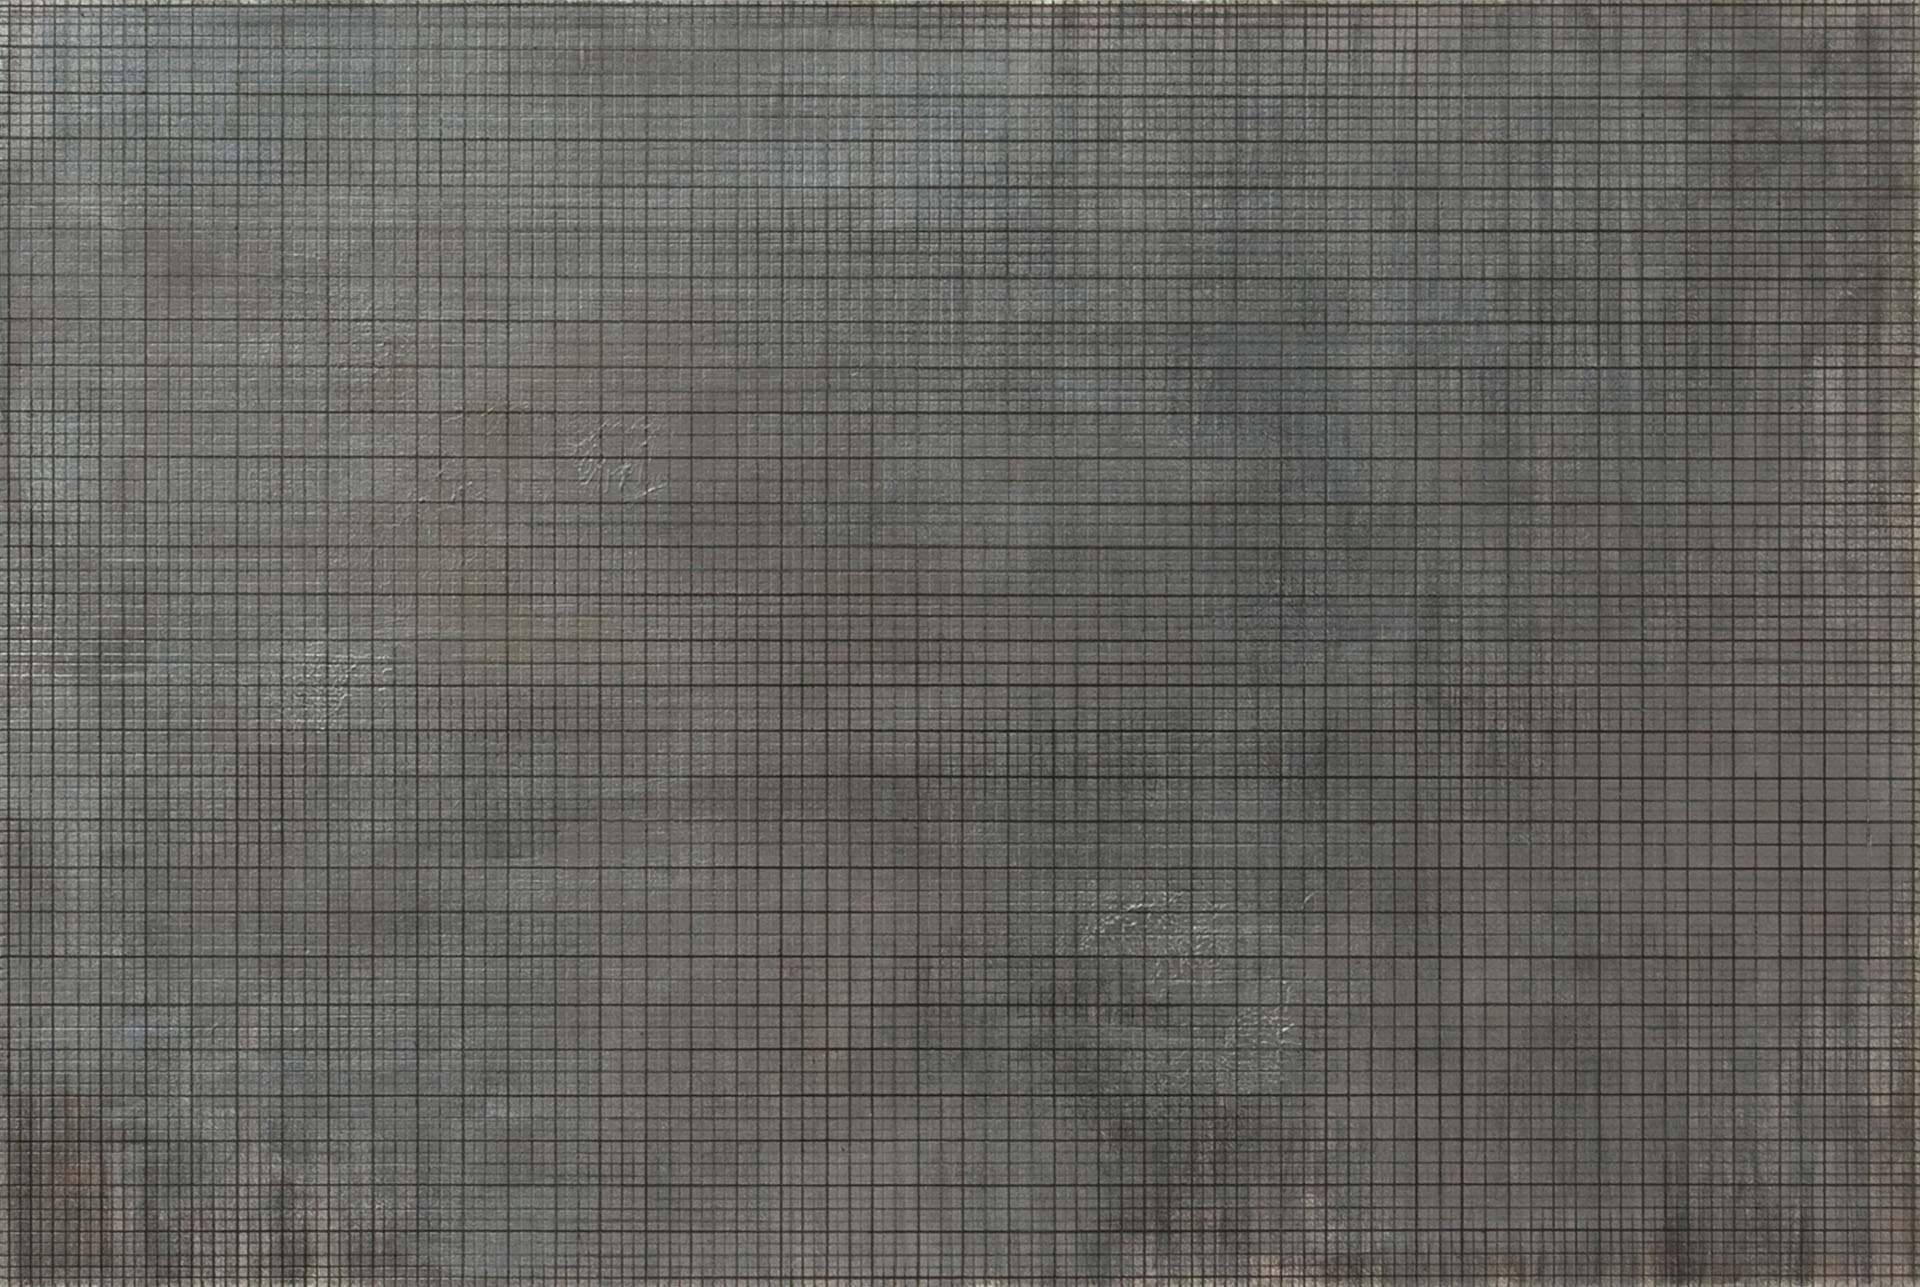 Grid 3, 2009, acrylic and graphite on bristol board, 220 x 335mm